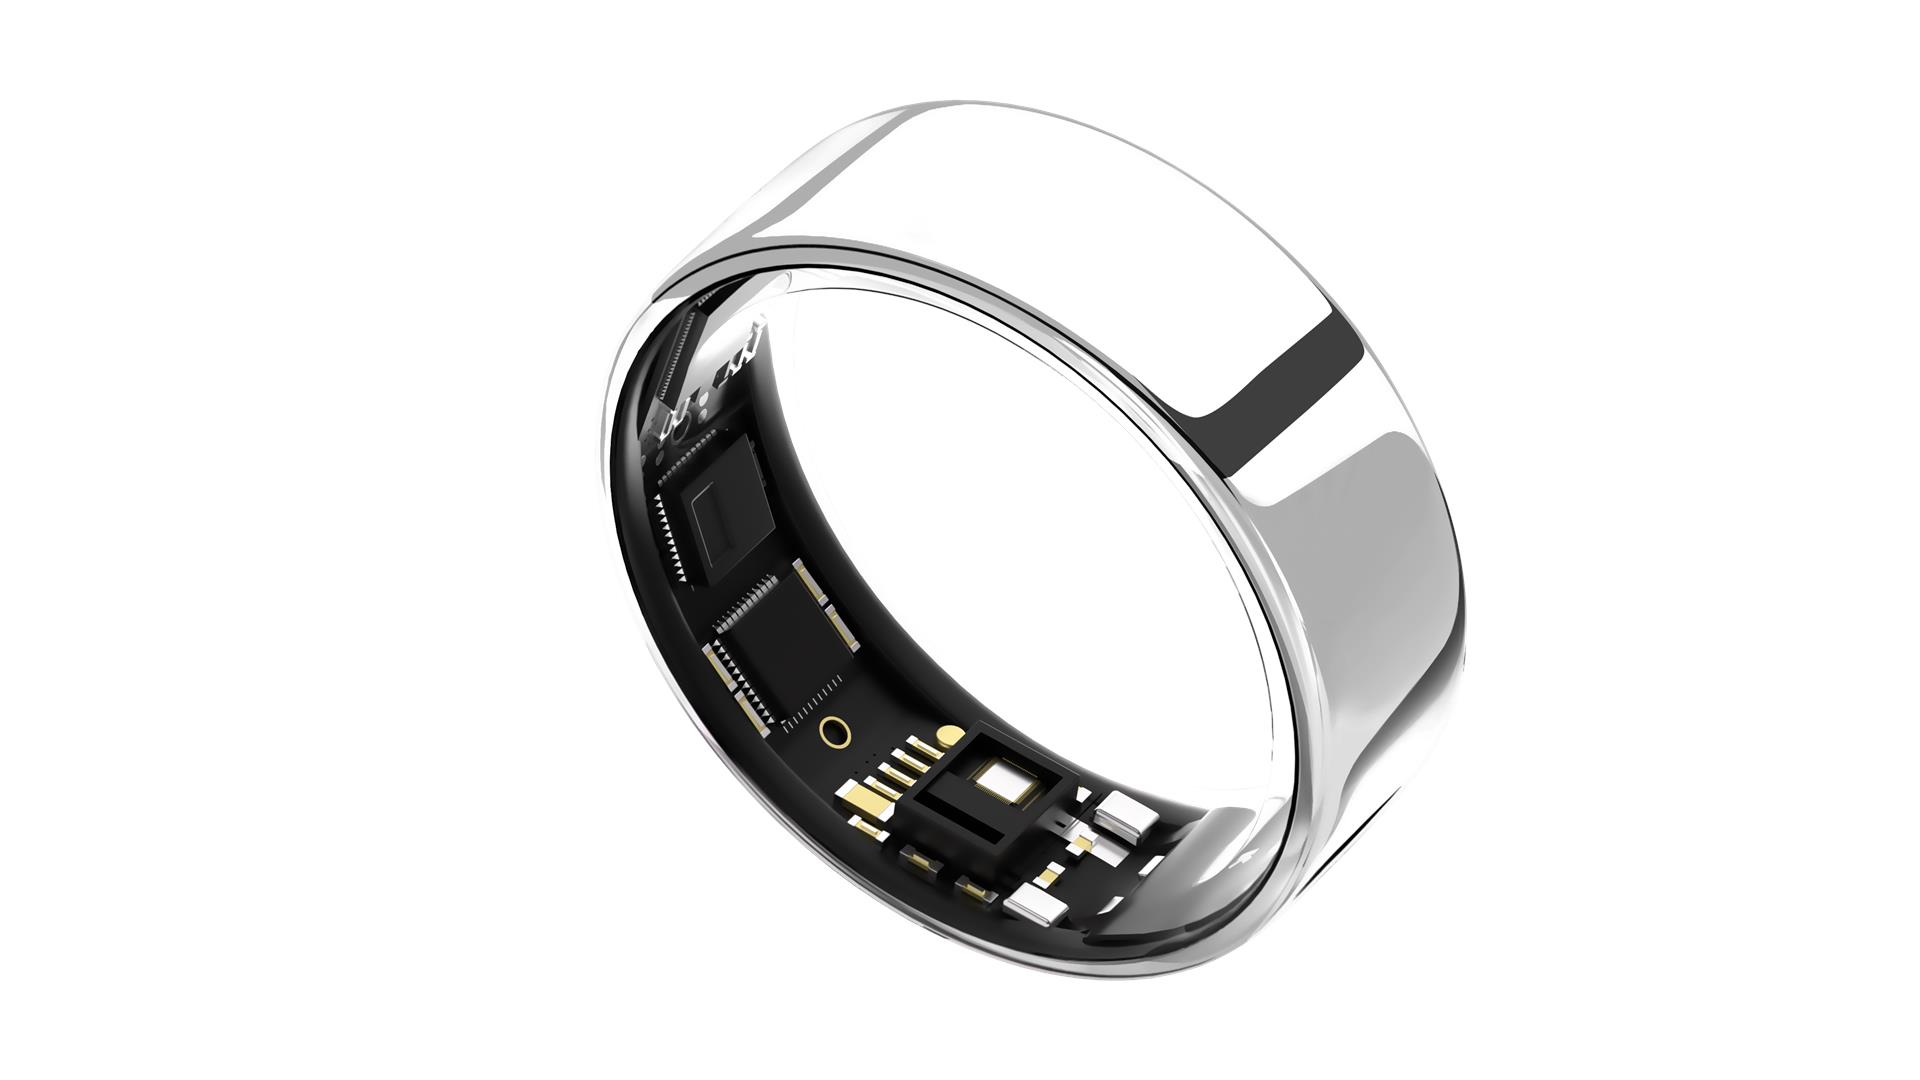 Ultrahuman Ring Air Умное кольцо, серебристый, 10